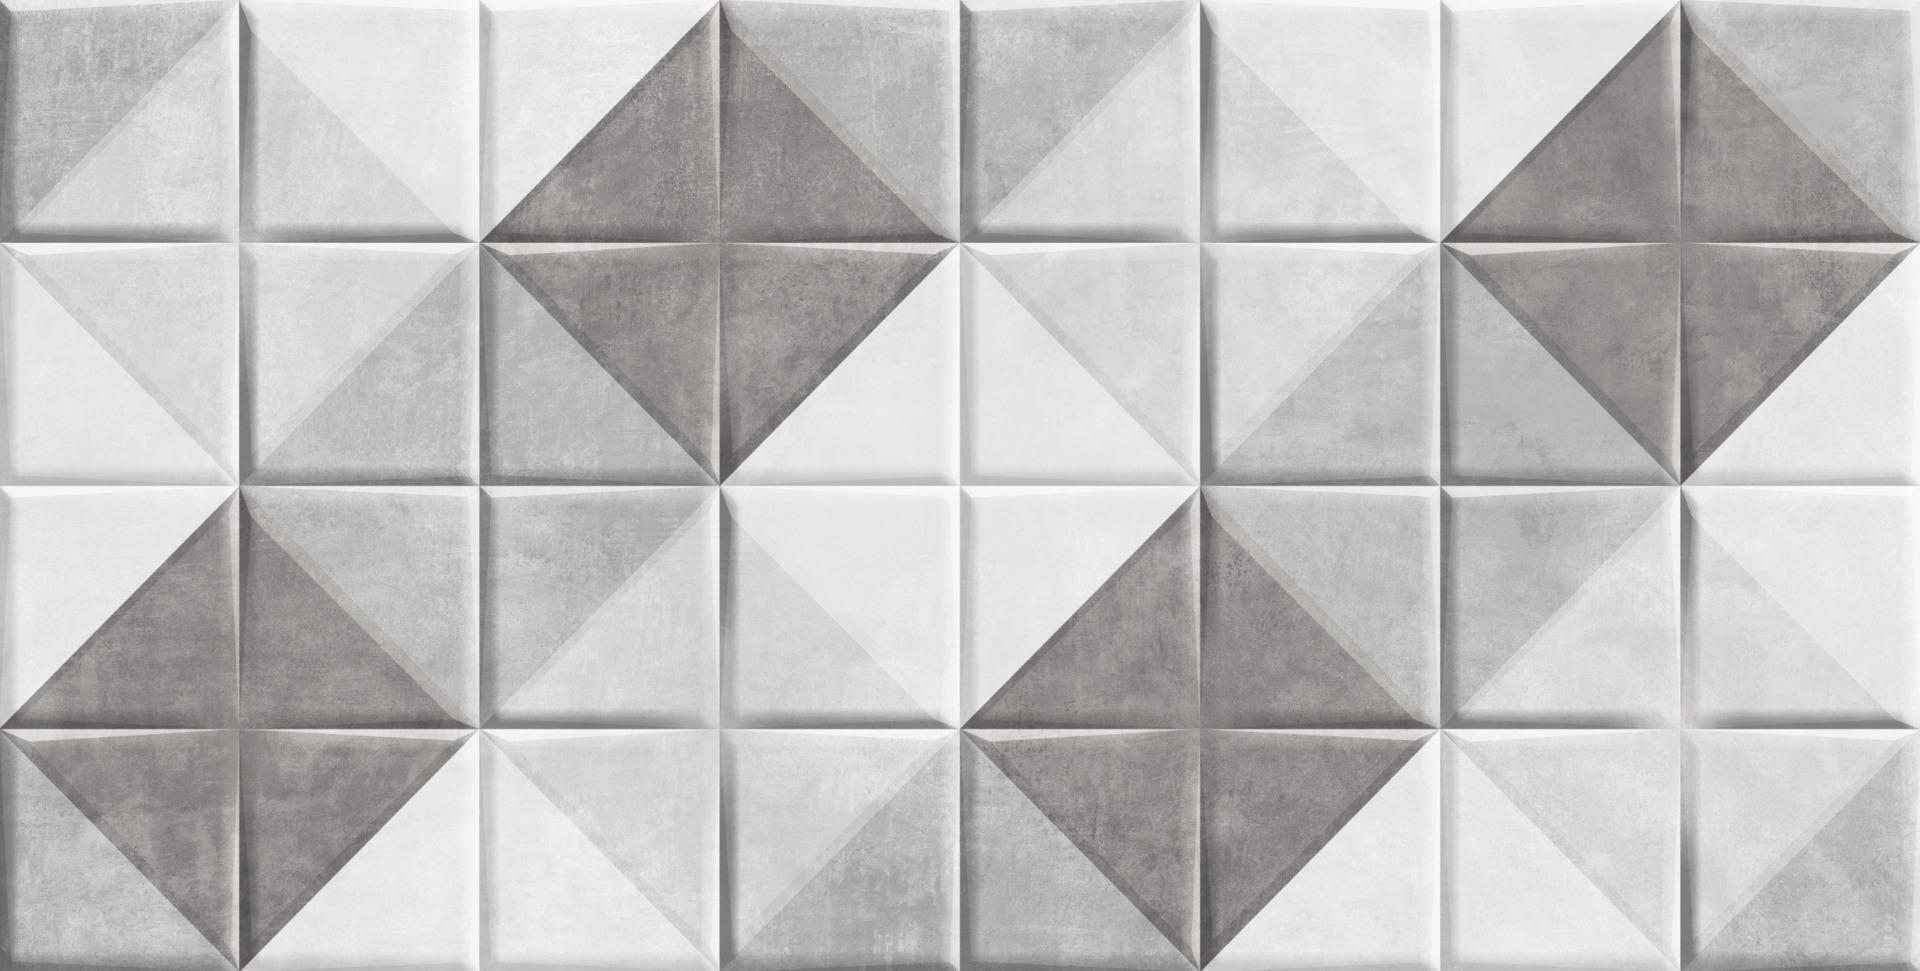 Wall Tiles for Bathroom Tiles, Living Room Tiles, Kitchen Tiles, Bedroom Tiles, Accent Tiles, Automotive Tiles, Bar/Restaurant, Commercial/Office